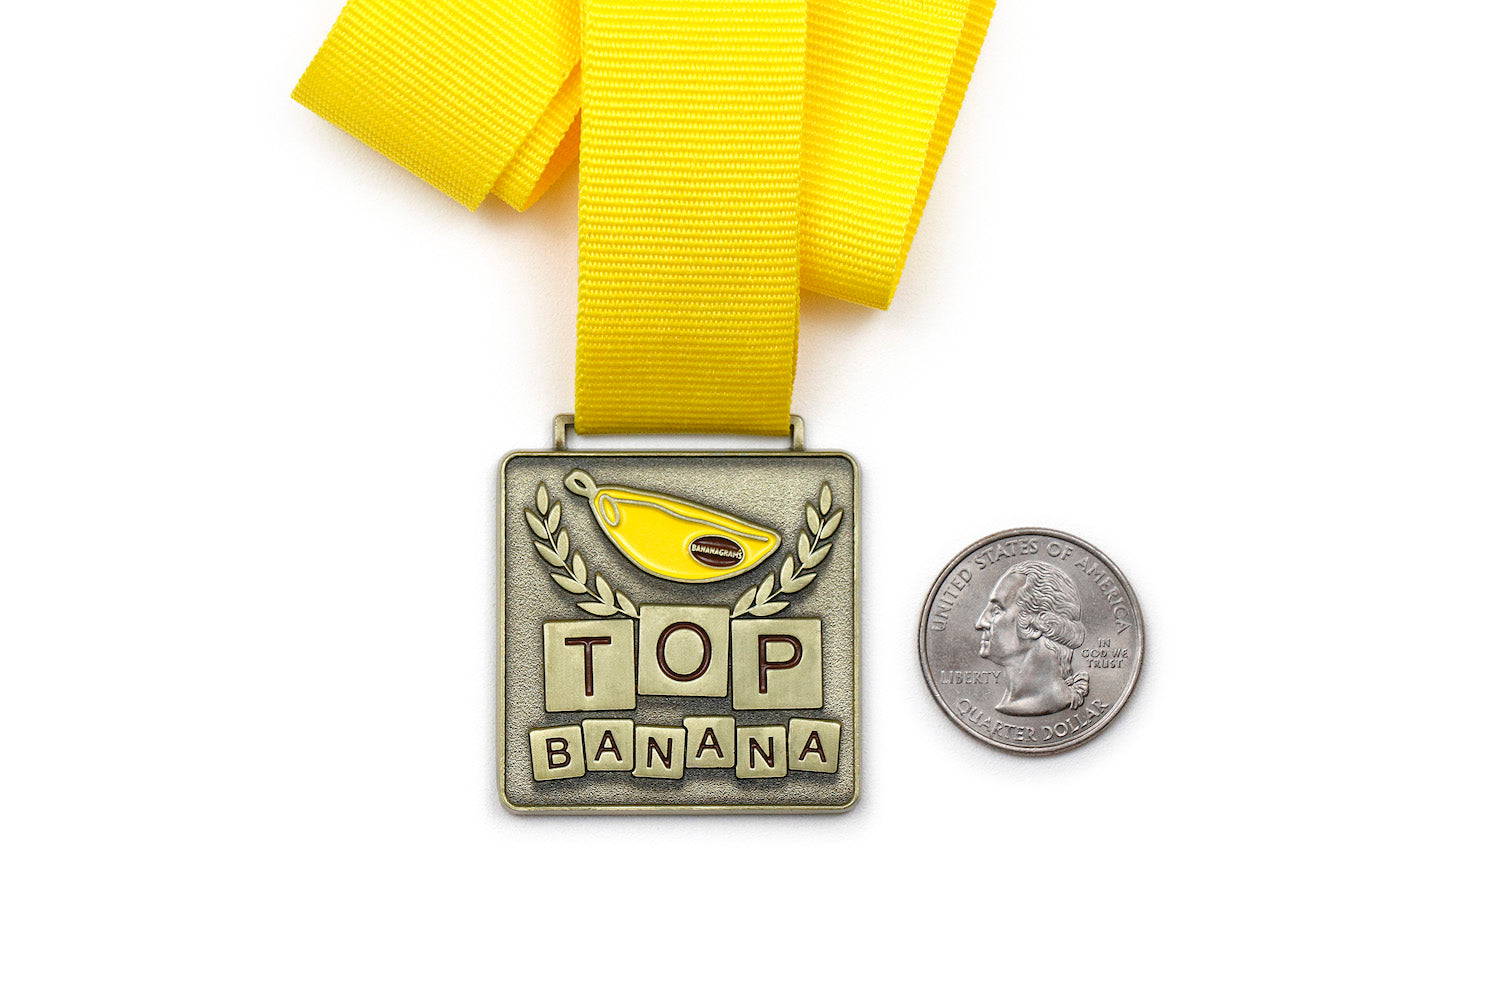 New low price! BANANAGRAMS TOP BANANA Medal